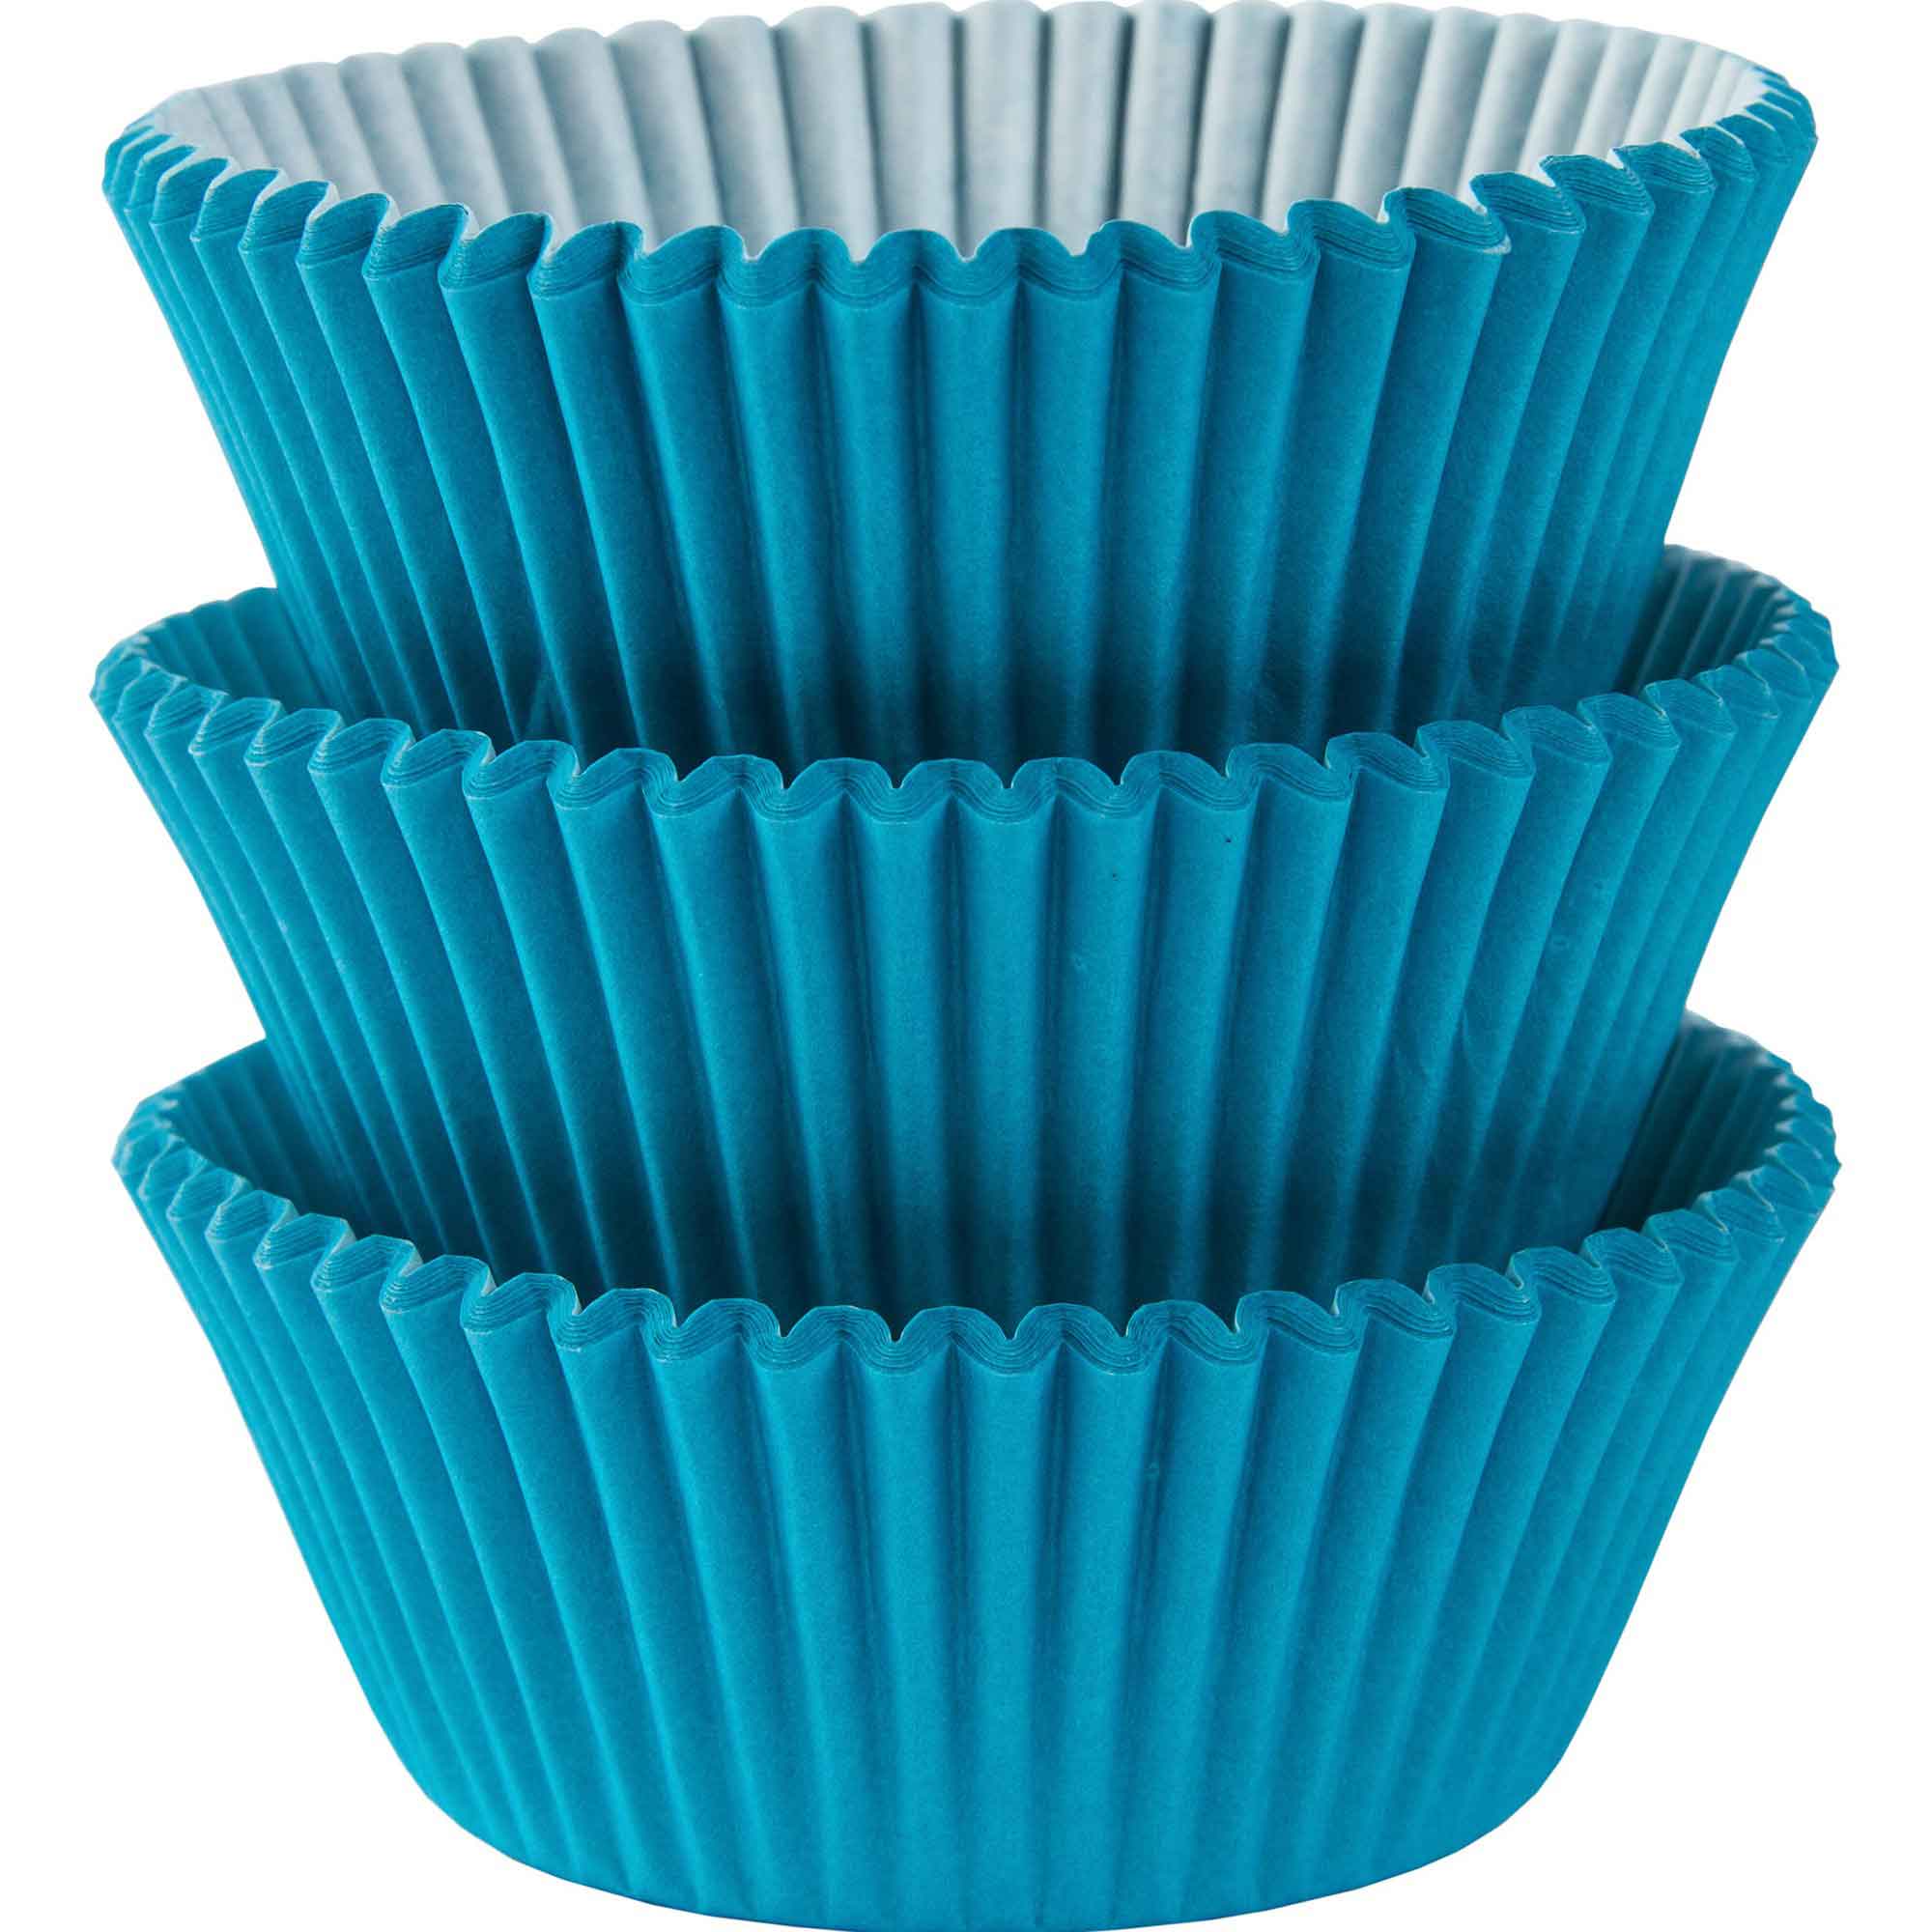 Cupcake Cases Bright Royal Blue Pk/75